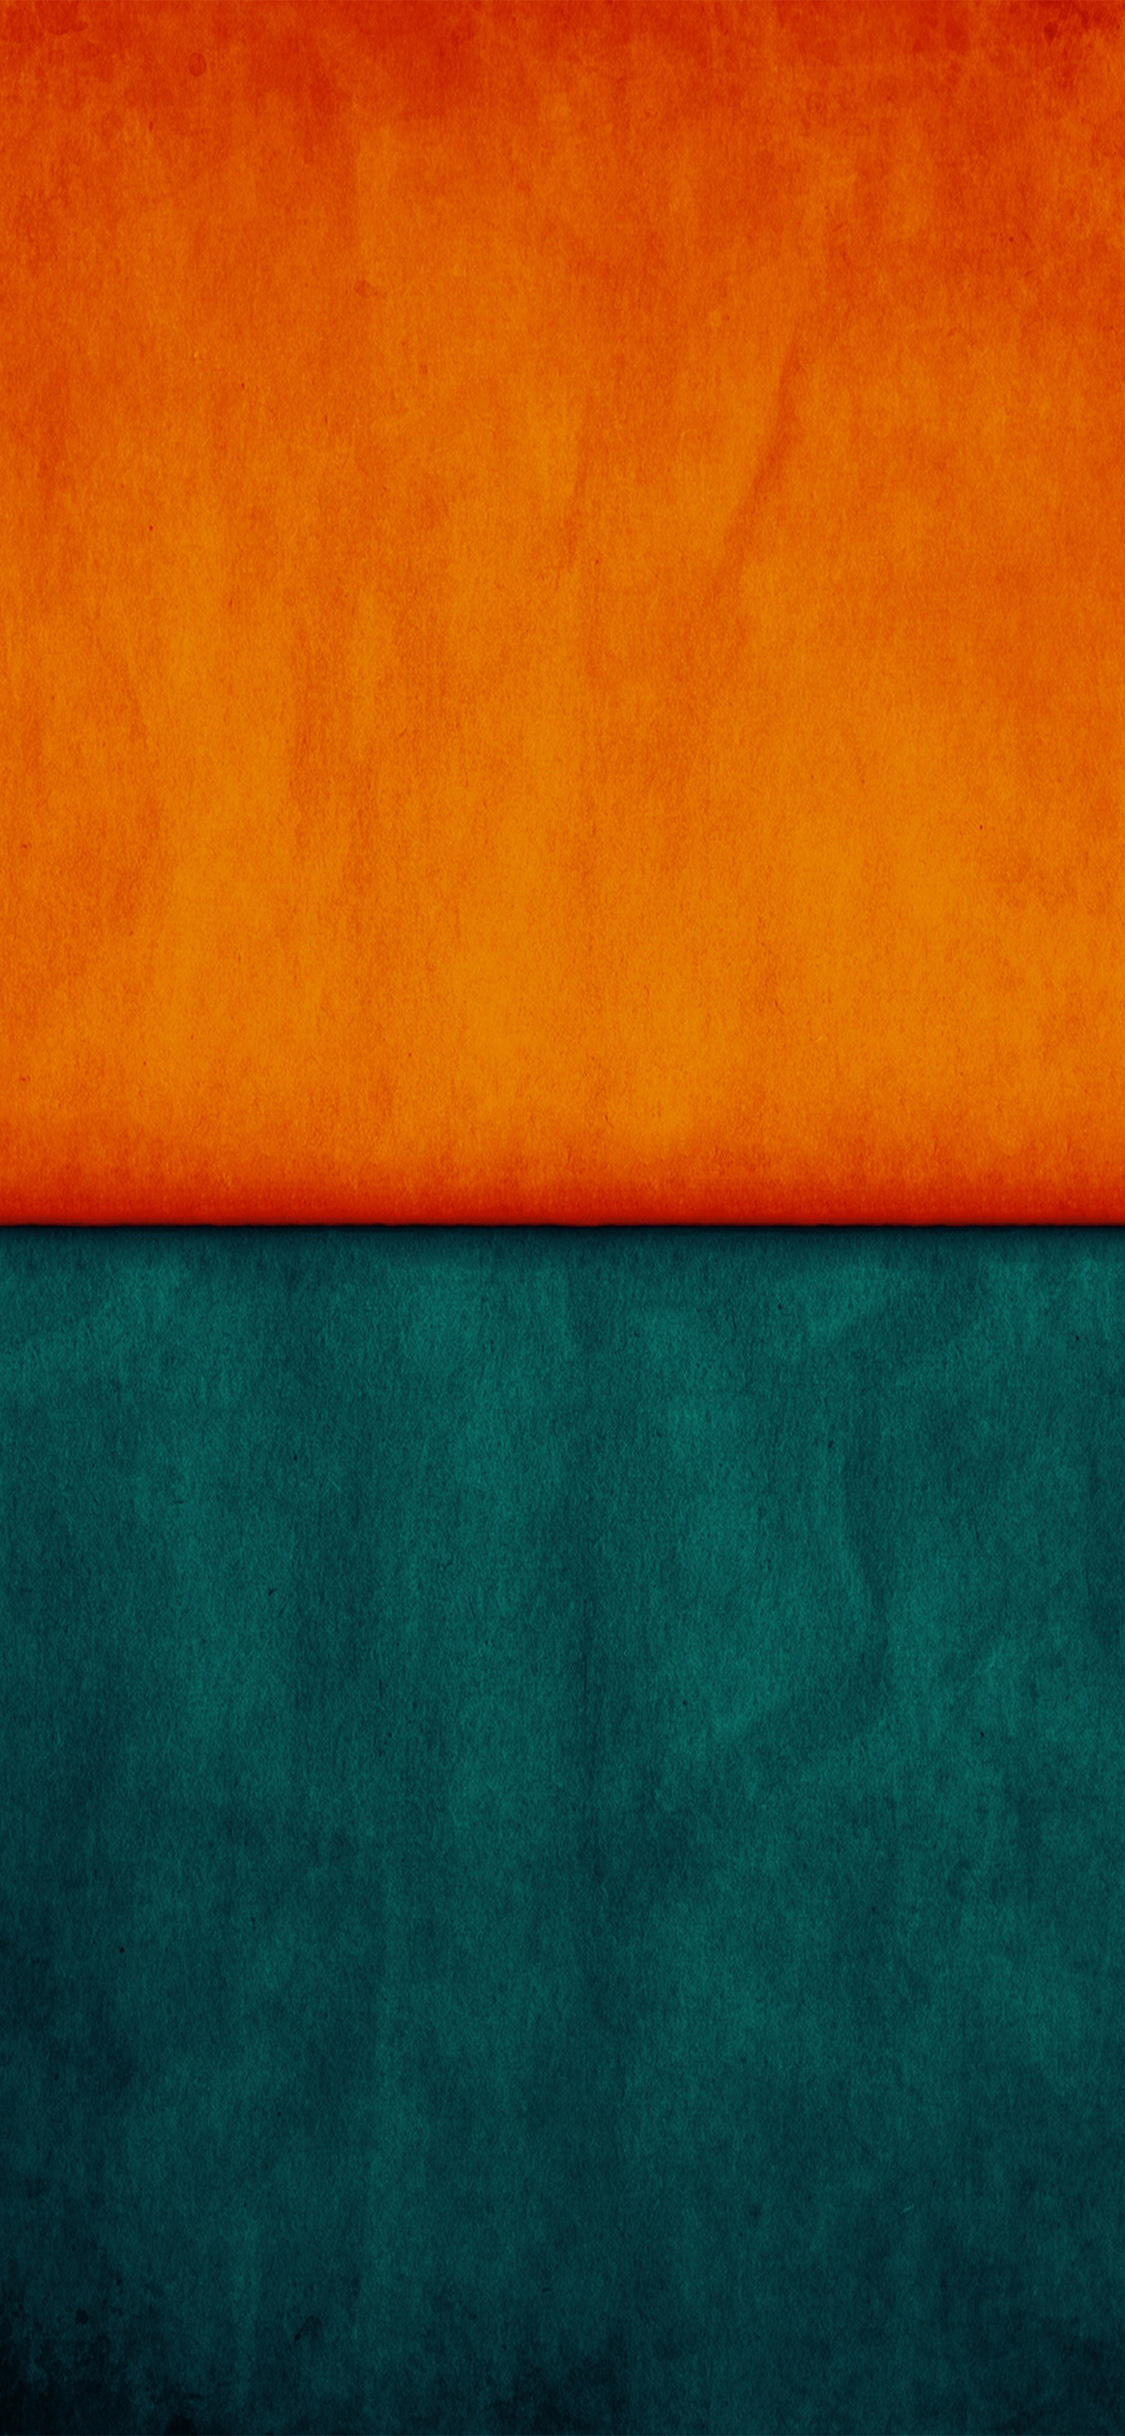 Iphone X Wallpaper Hd Orange - HD Wallpaper 